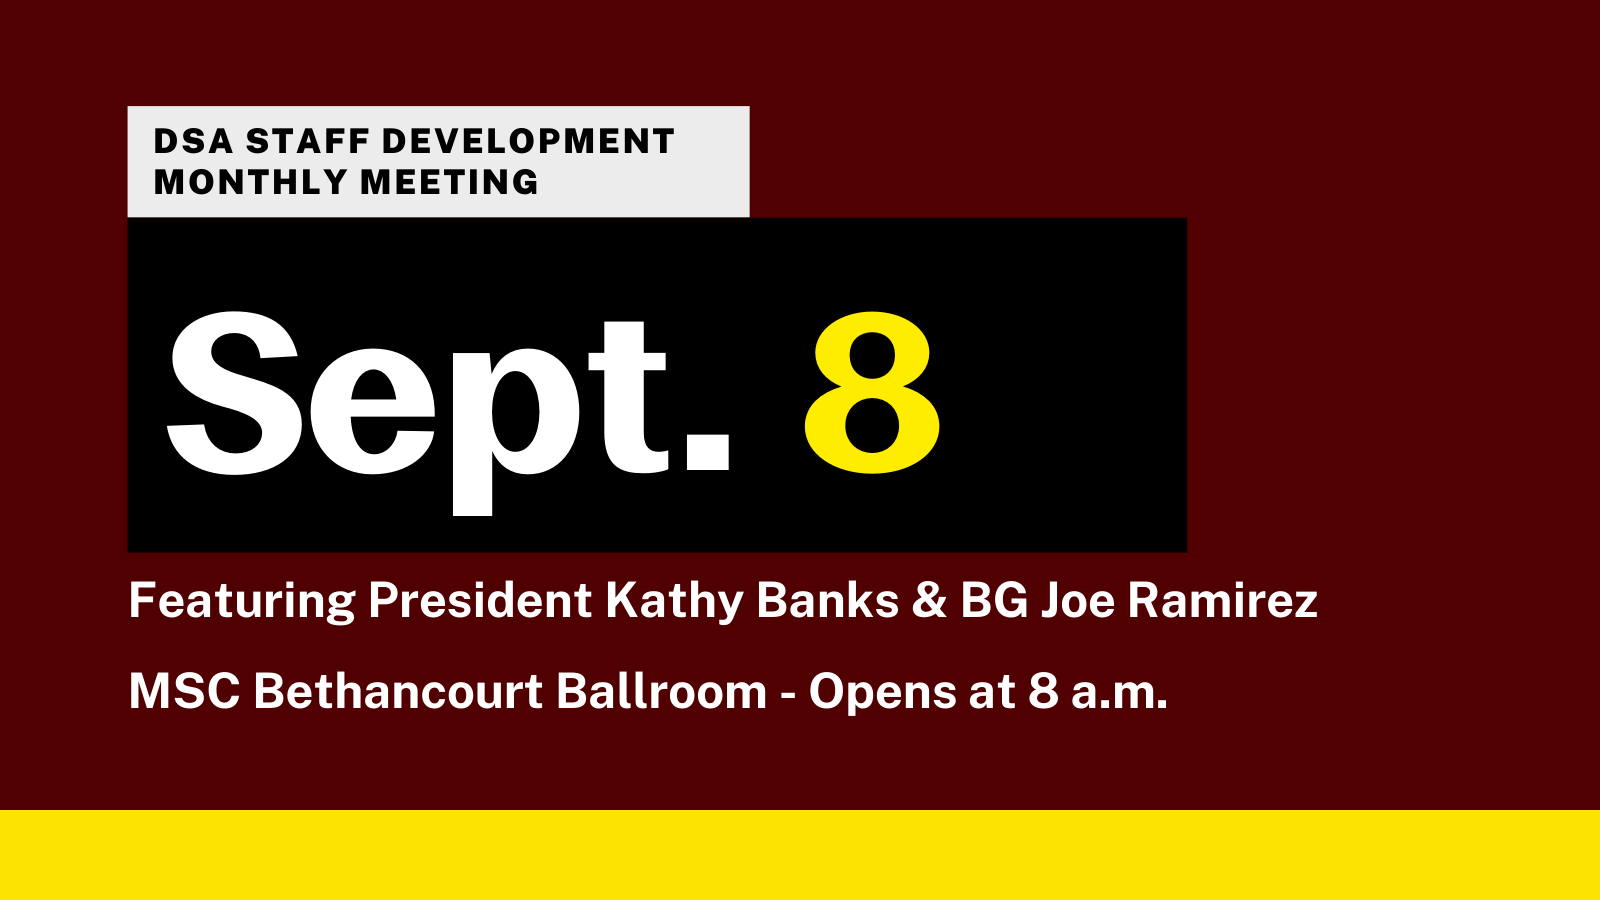 DSA Staff Development Monthly Meeting Sept. 8 featuring President Kathy Banks & BG Joe Ramirez